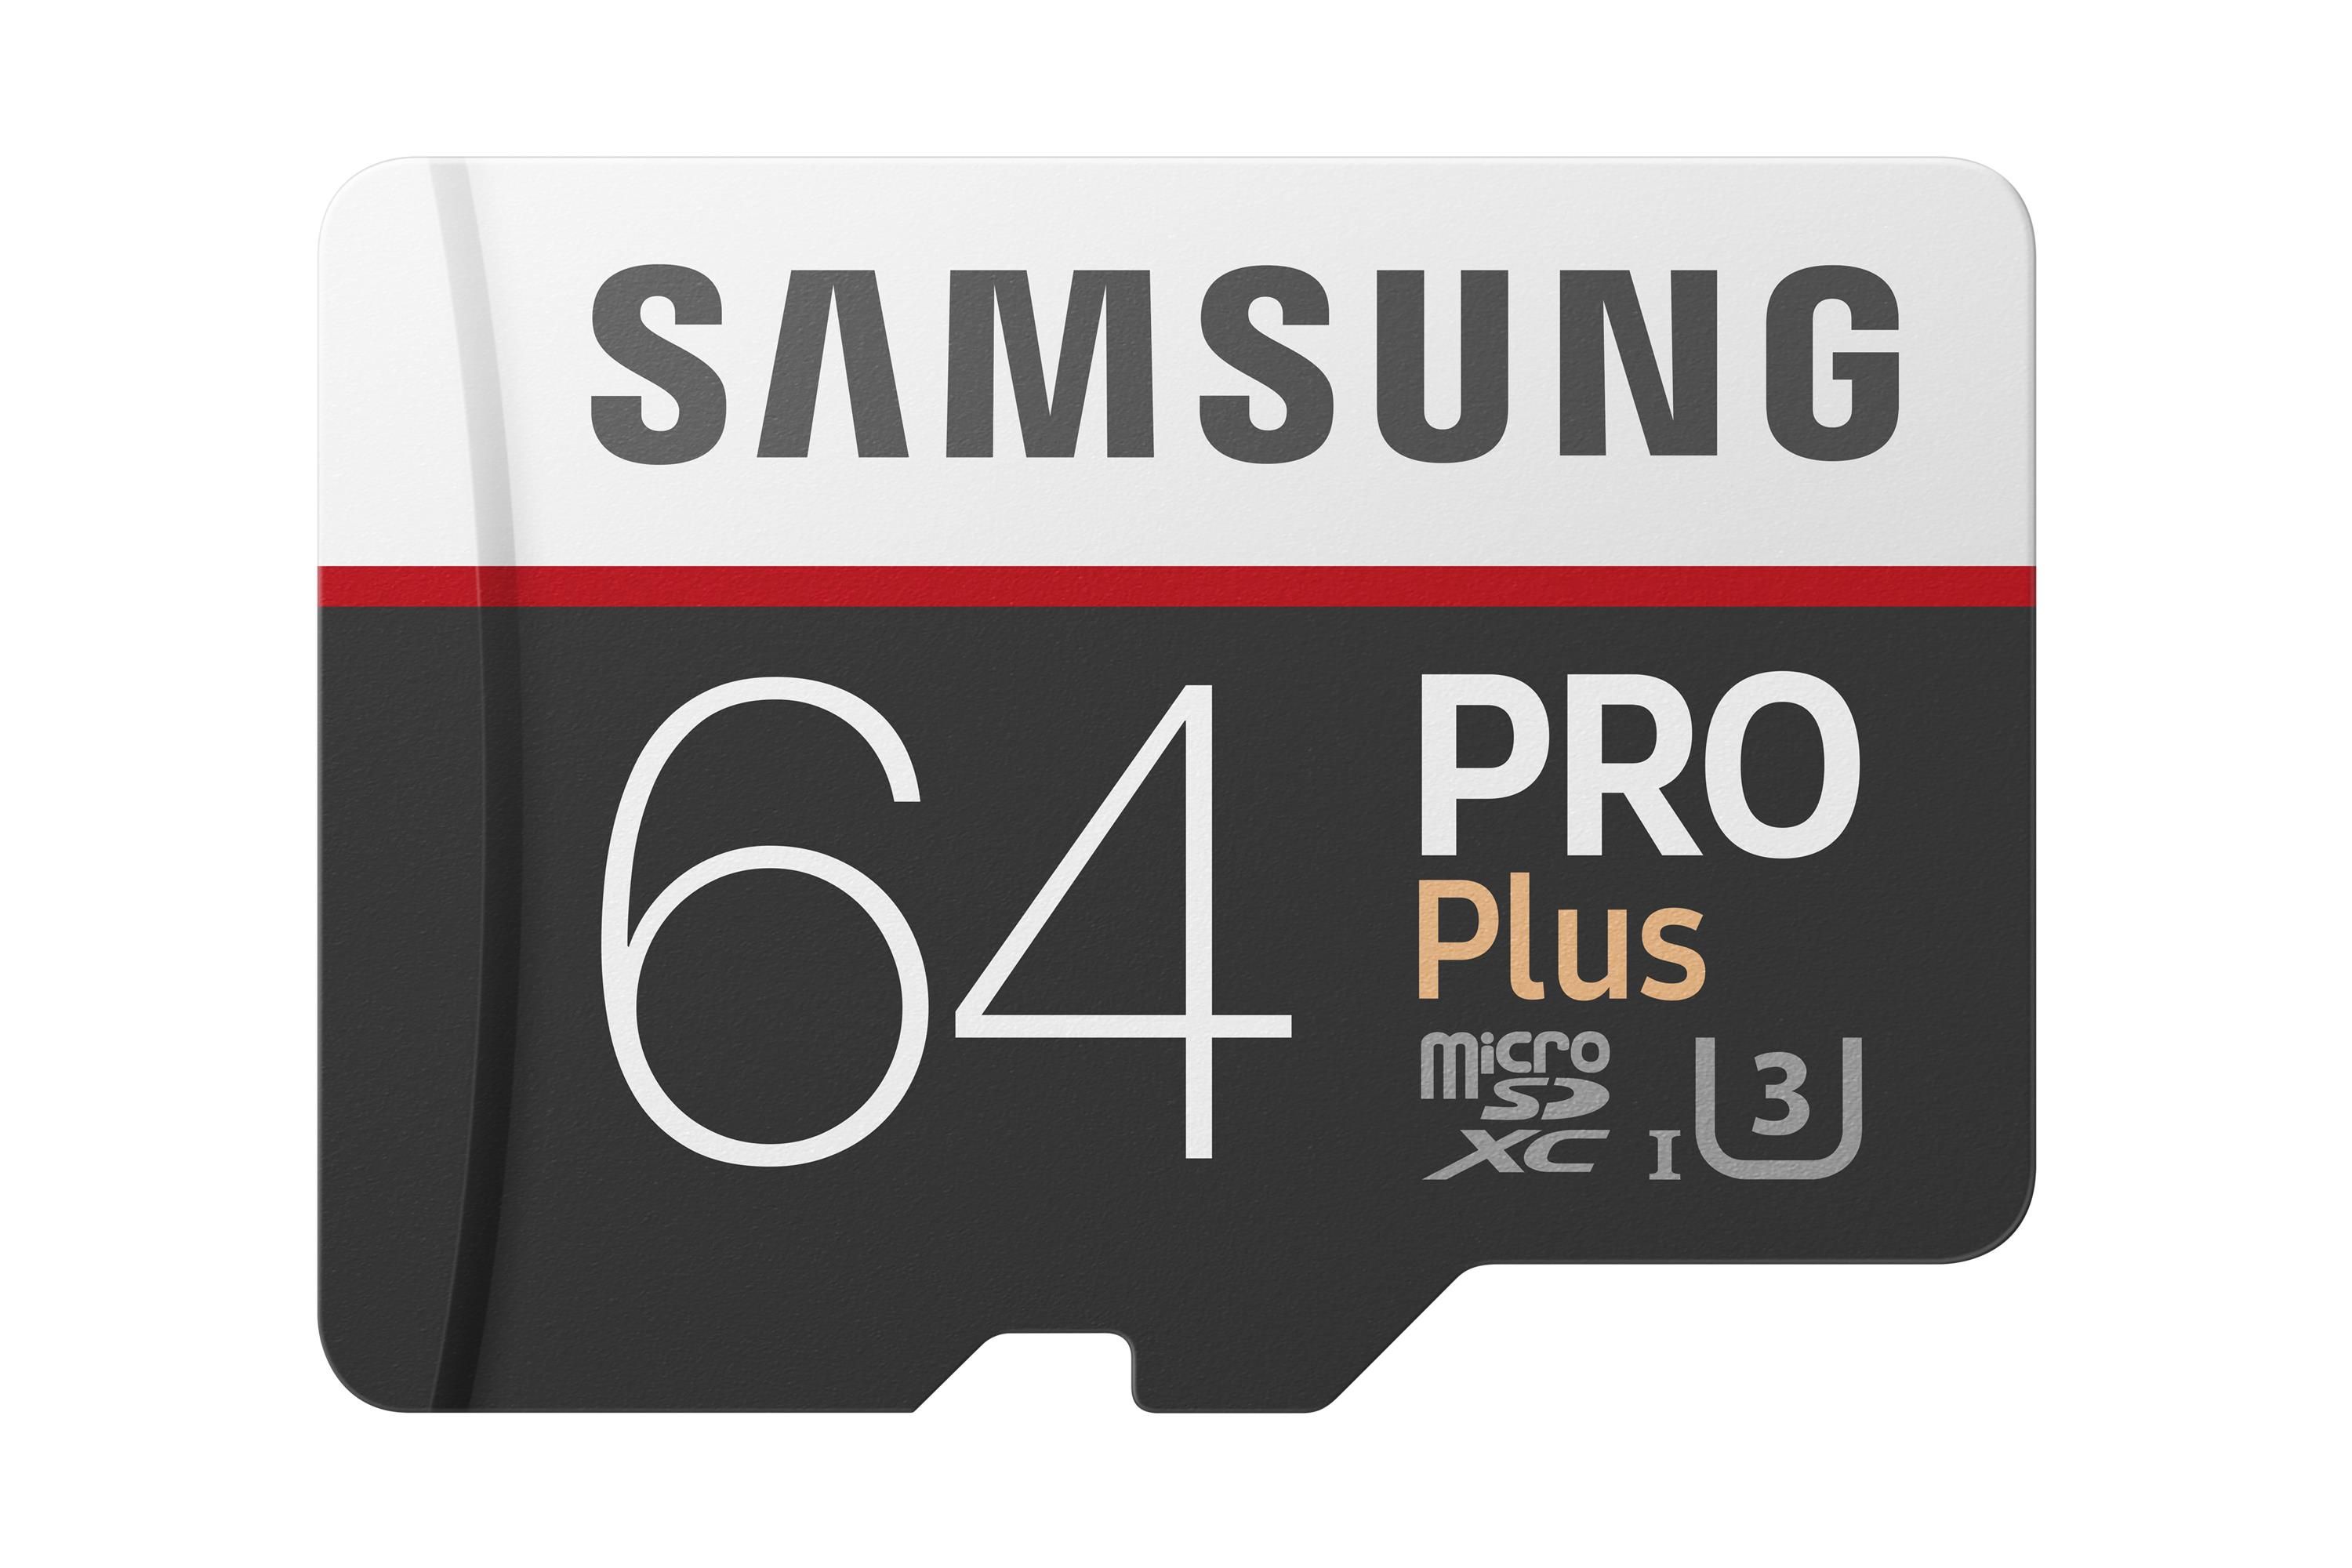 Samsung Pro Plus Uhs-i